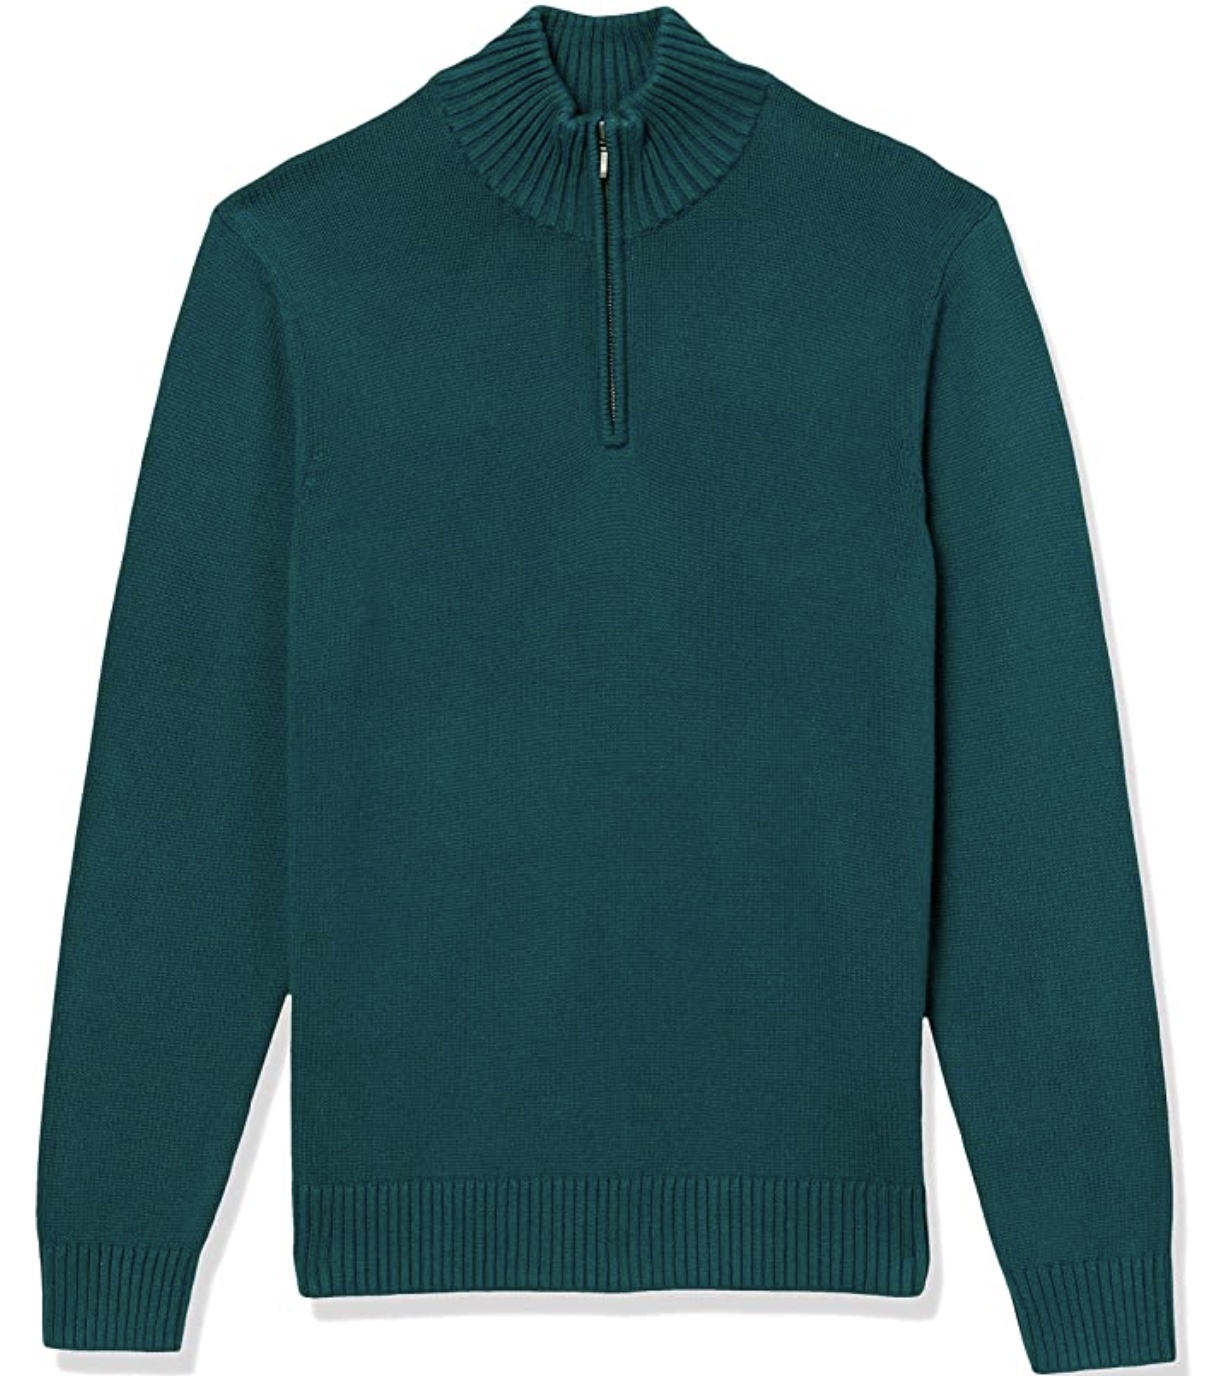 Amazon Basics half zip sweater.